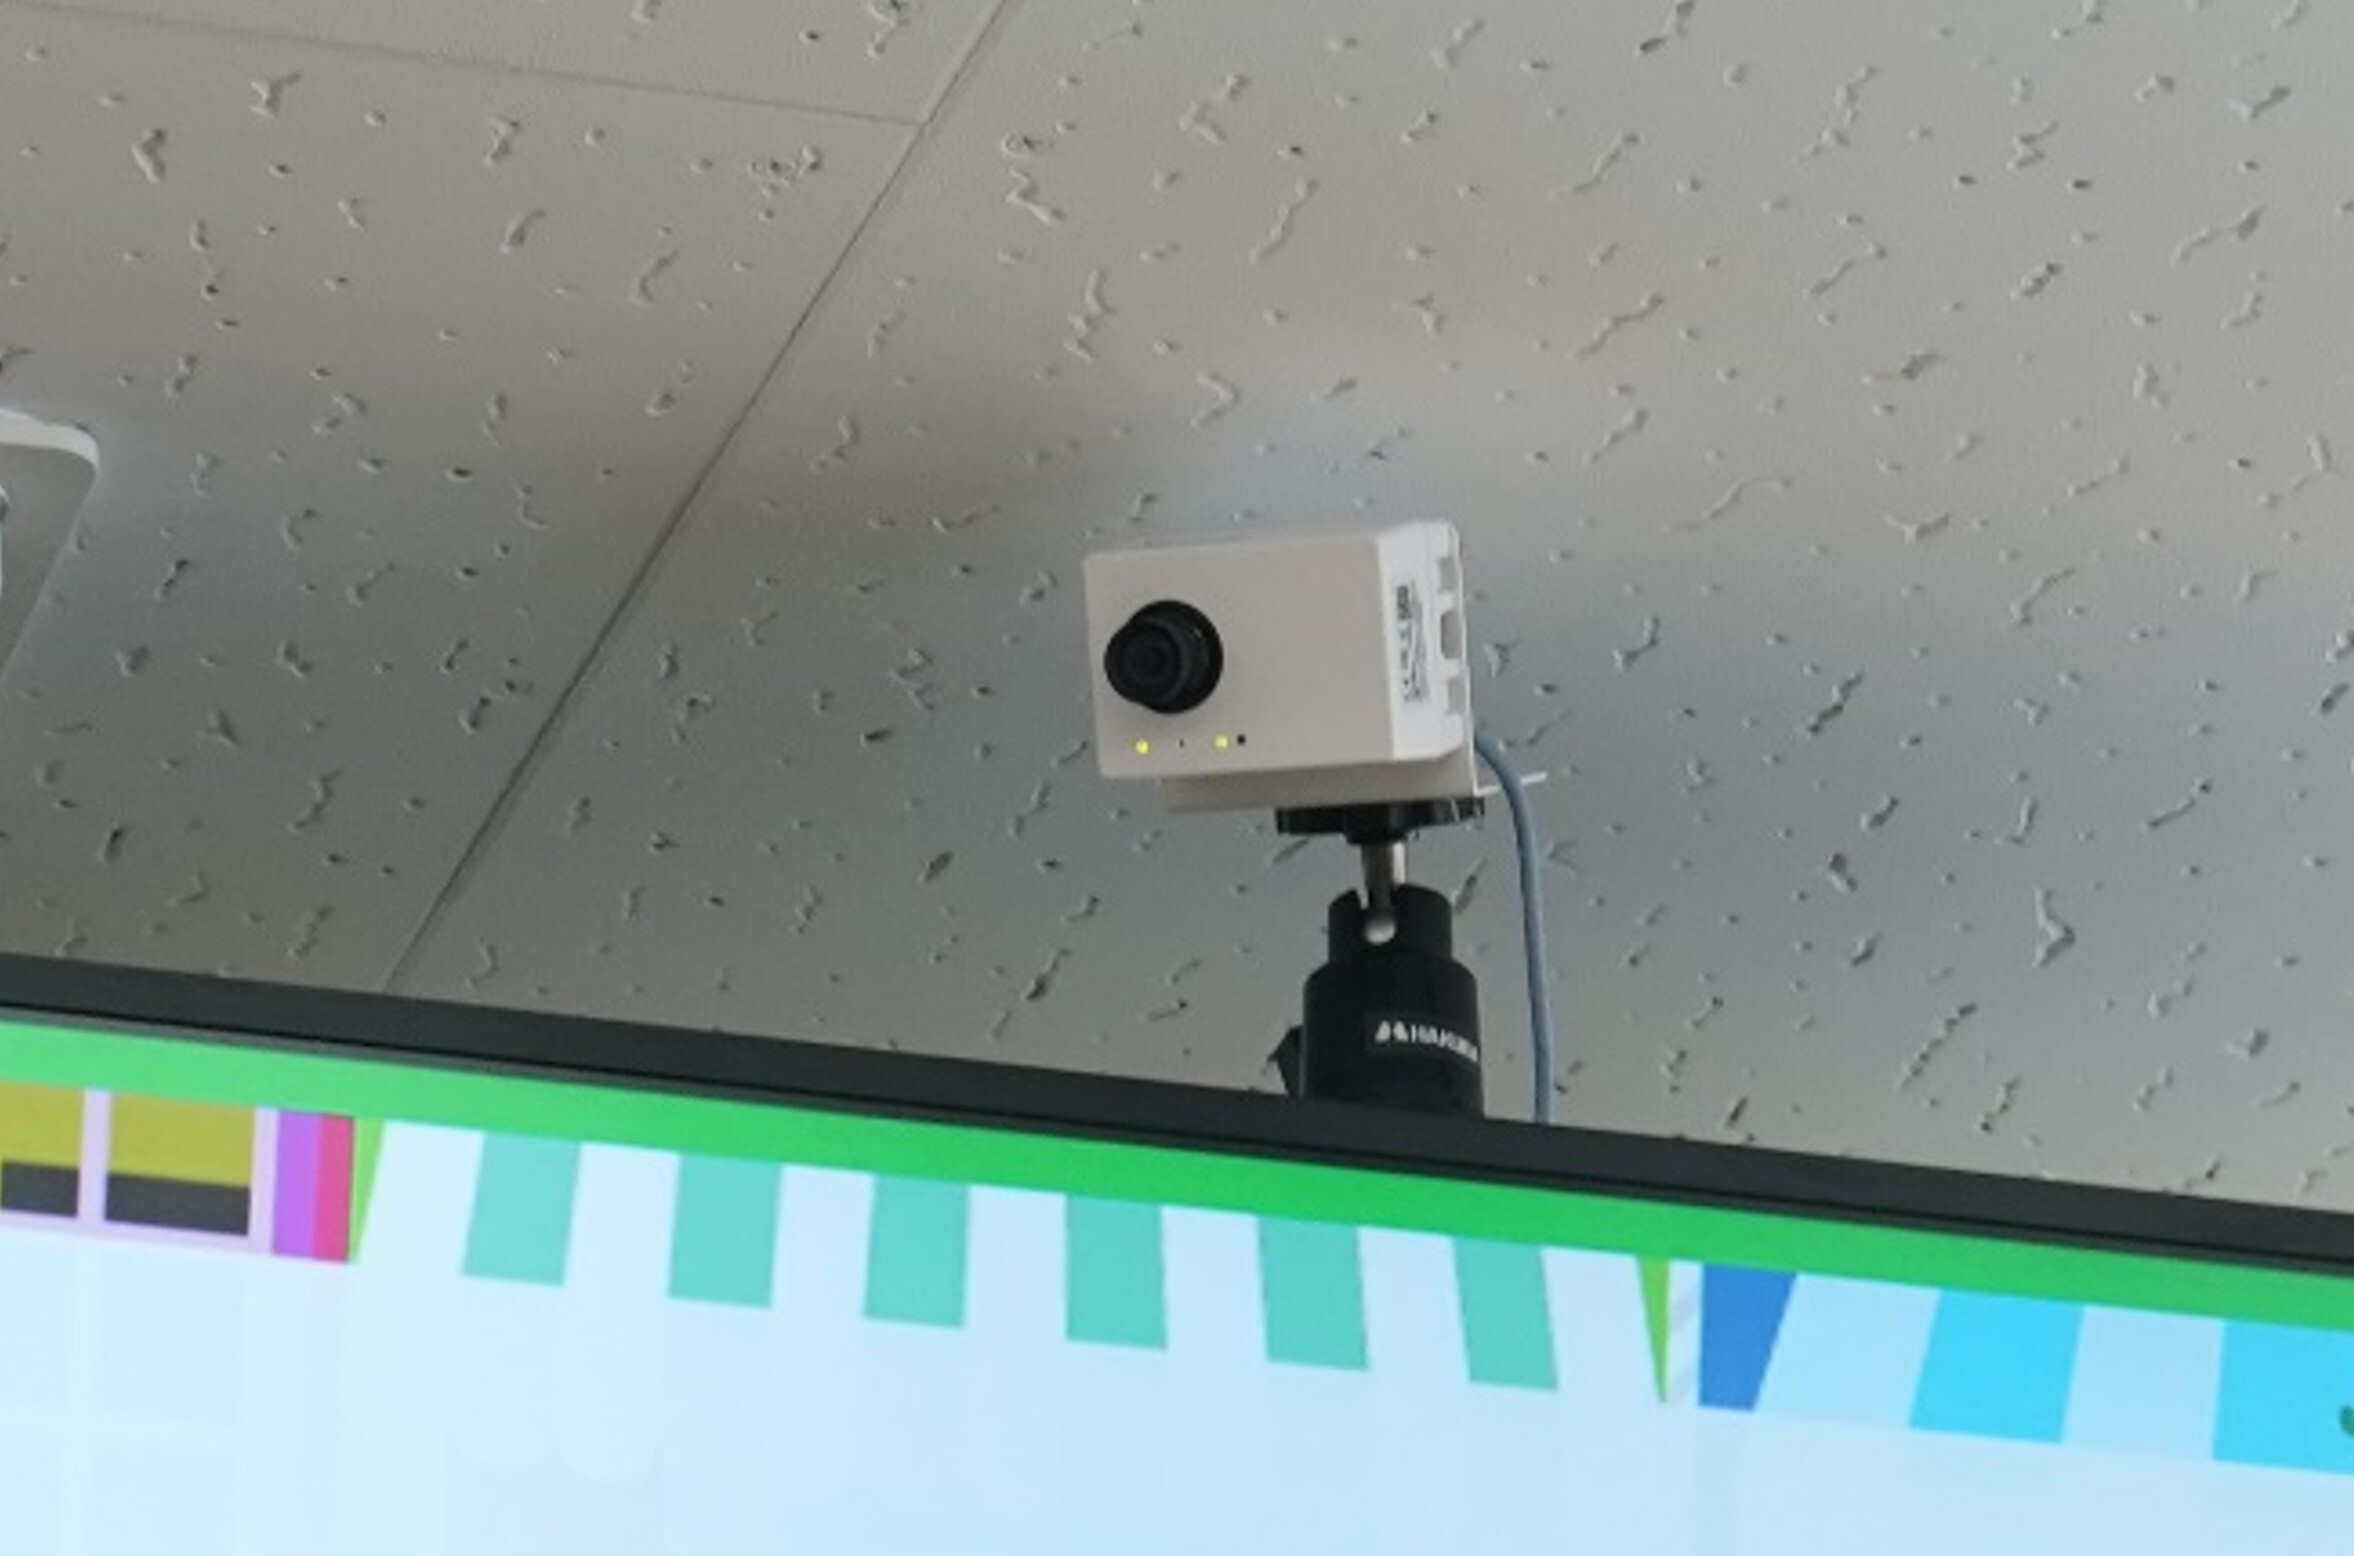 imx500ai-camera-installed.jpg